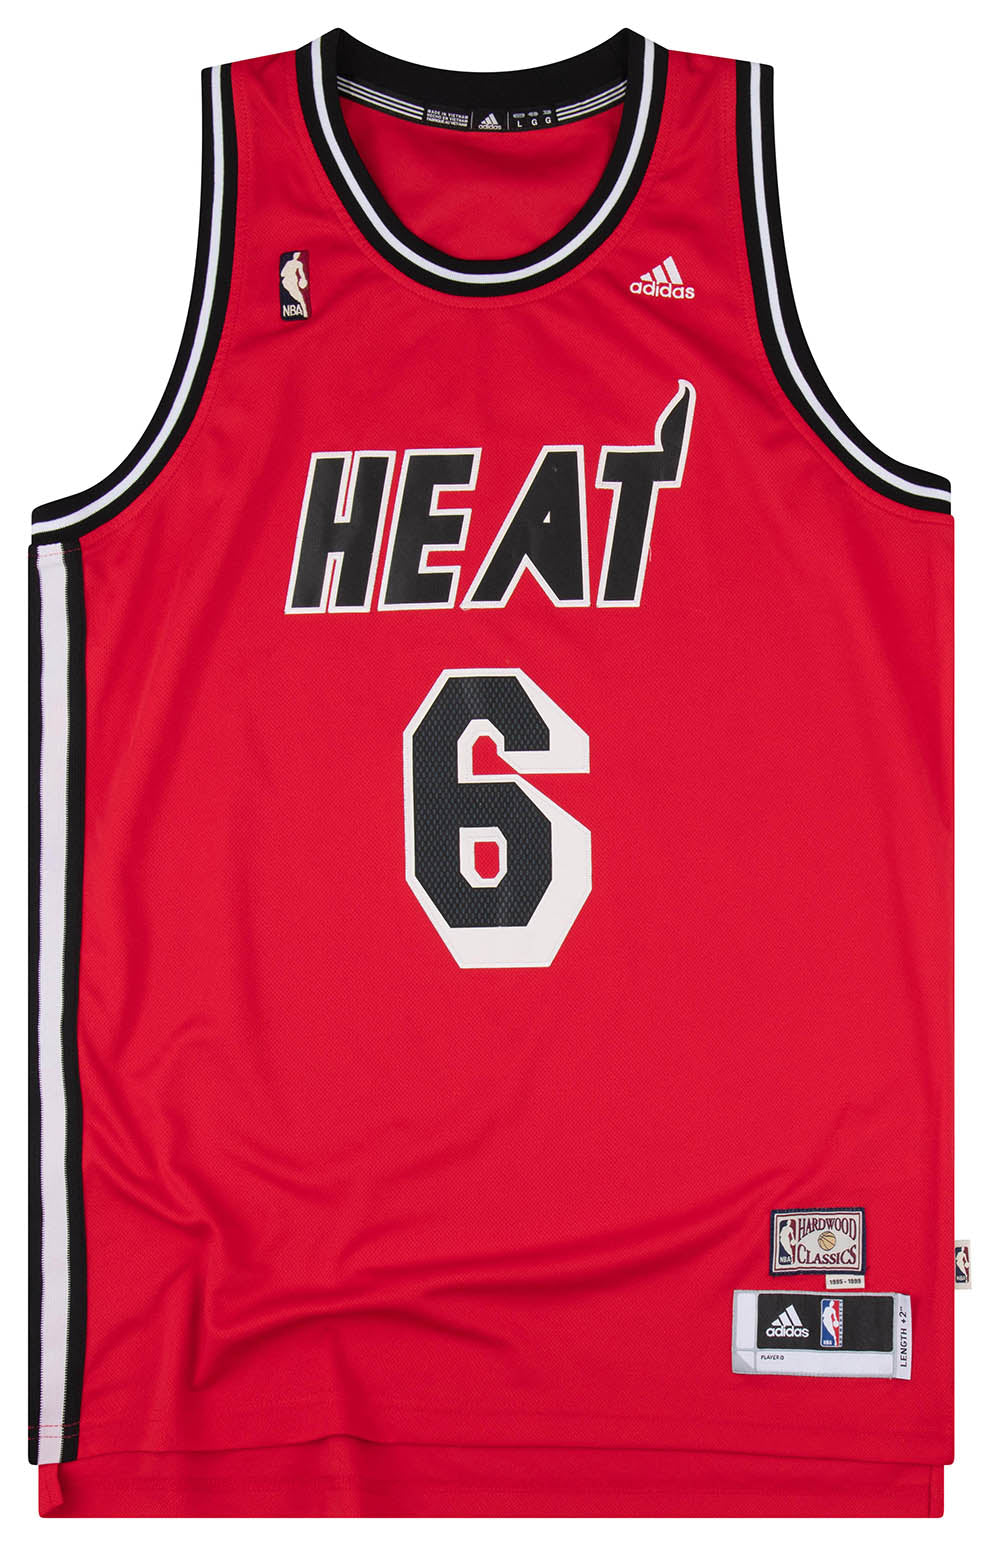 2013 NBA Finals MVP Miami Heat Lebron James Alternative Jersey